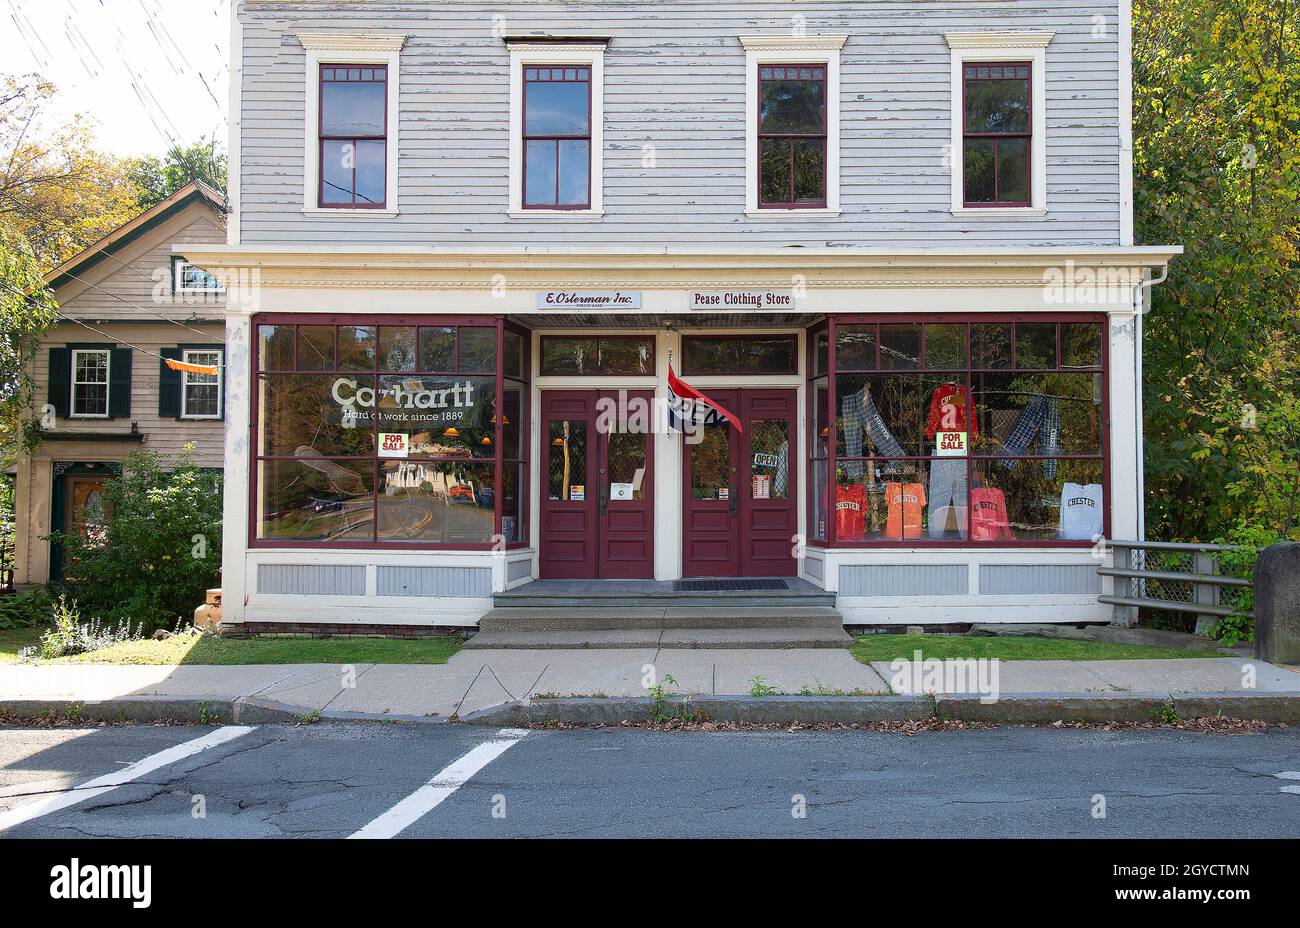 Un histórico frente a la tienda (tienda de ropa) en una calle lateral de Chester, Massachusetts, EE.UU Foto de stock